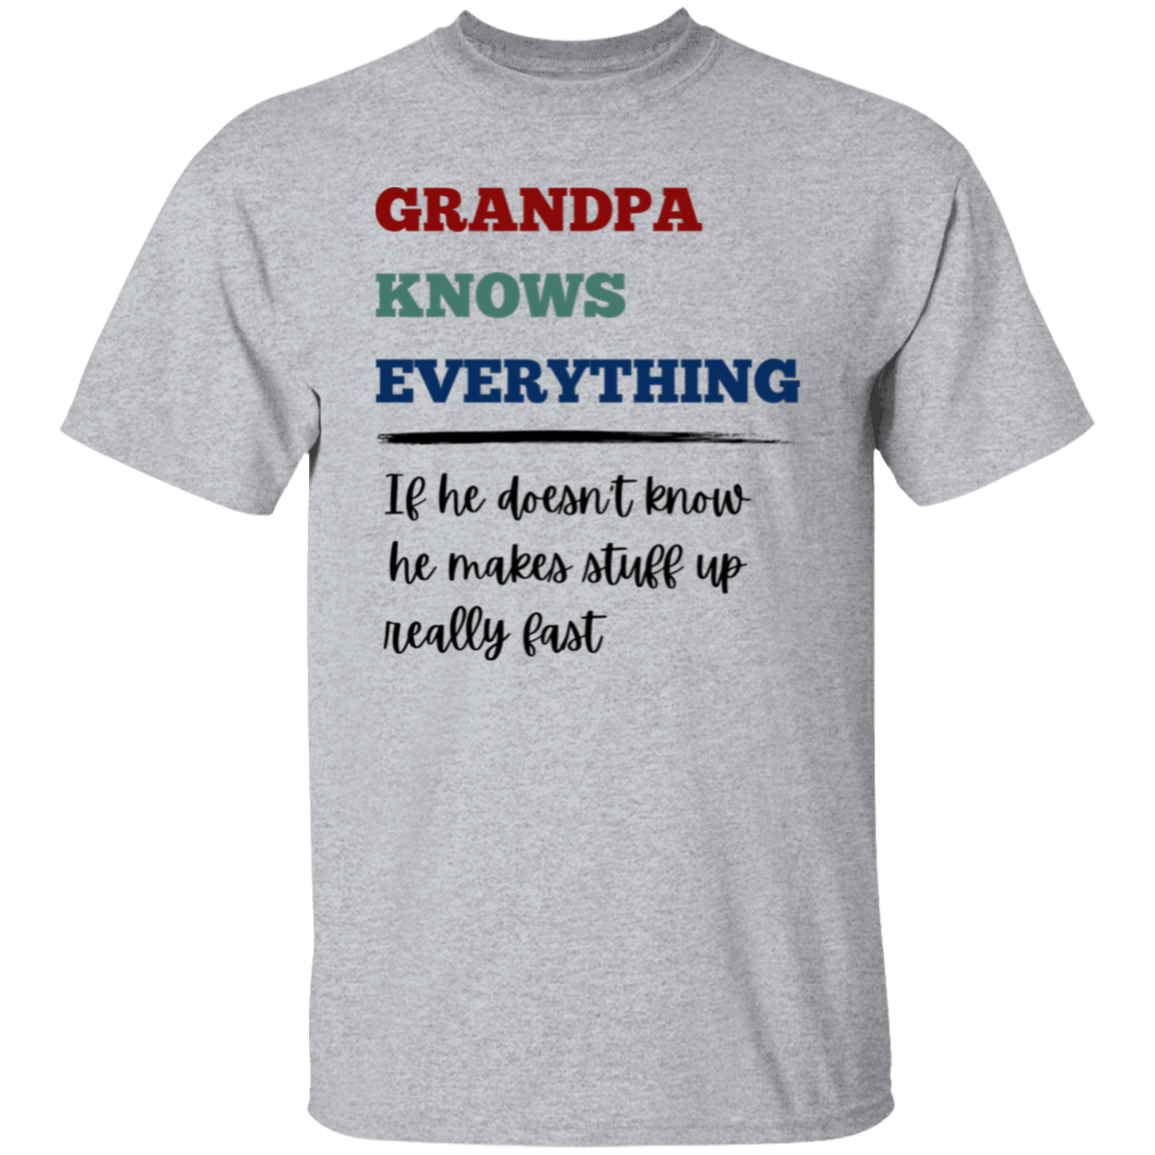 Grandpa Knows Everything 5.3 oz. T-Shirt